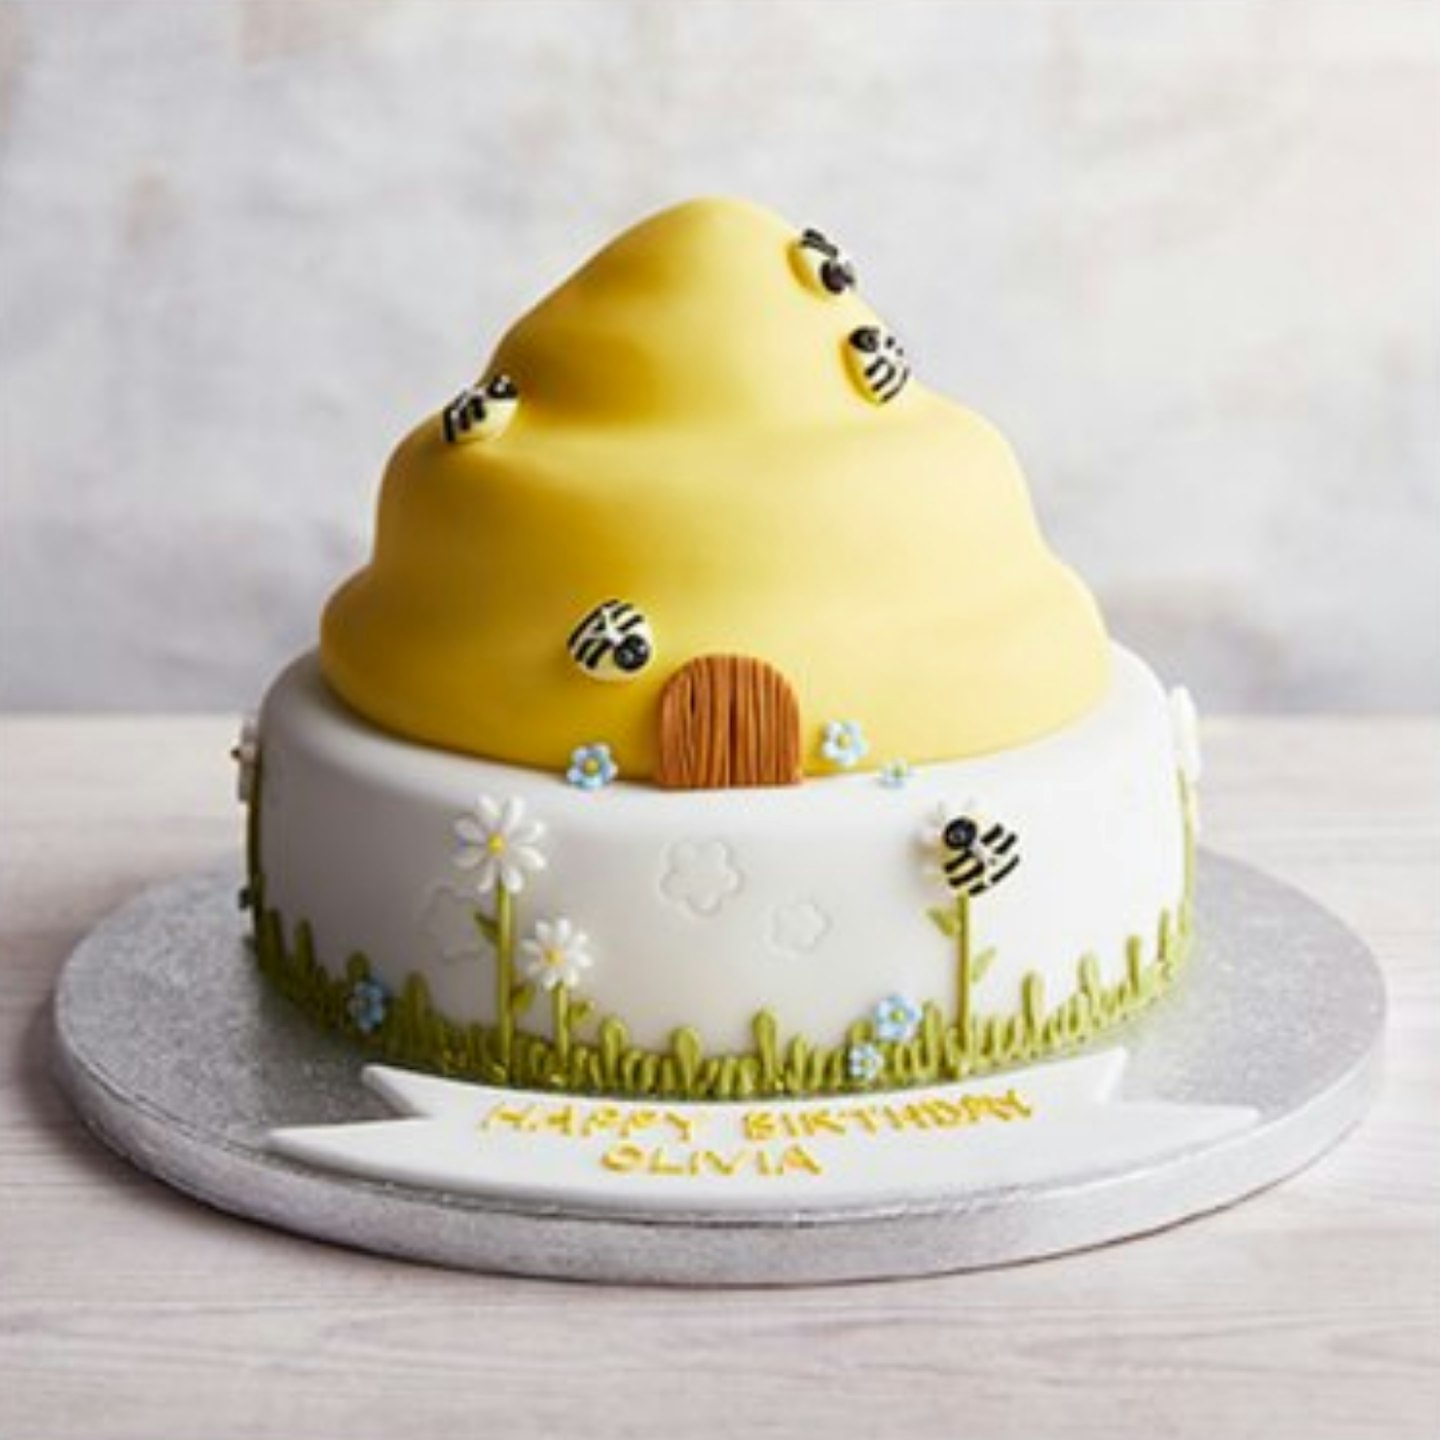 The best supermarket birthday cakes: Beehive Cake